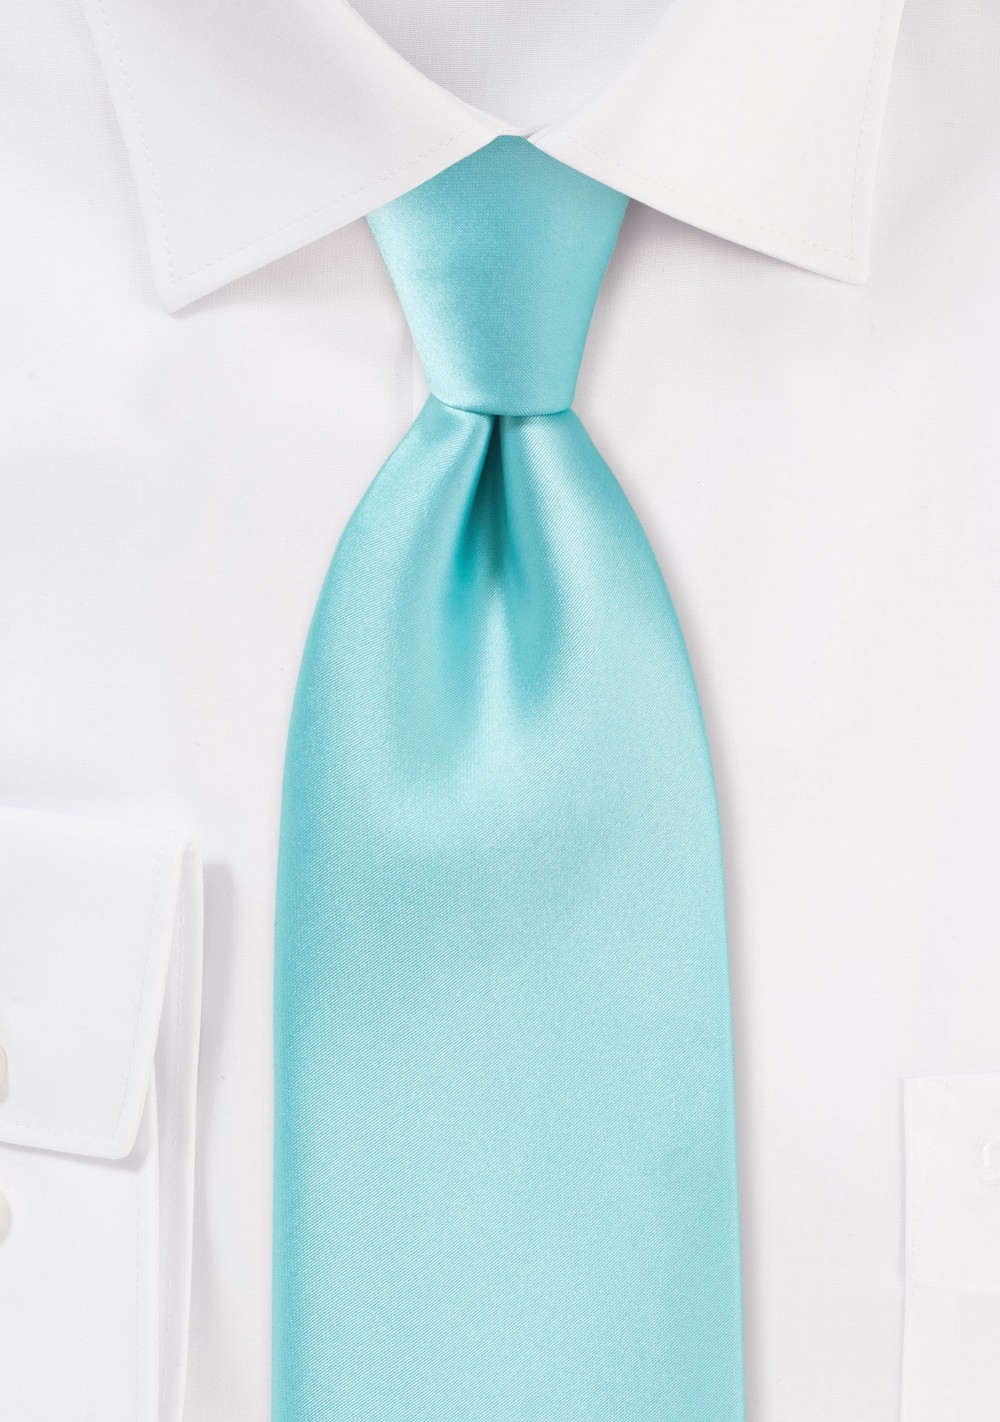 Light Turquoise Blue XL Length Tie